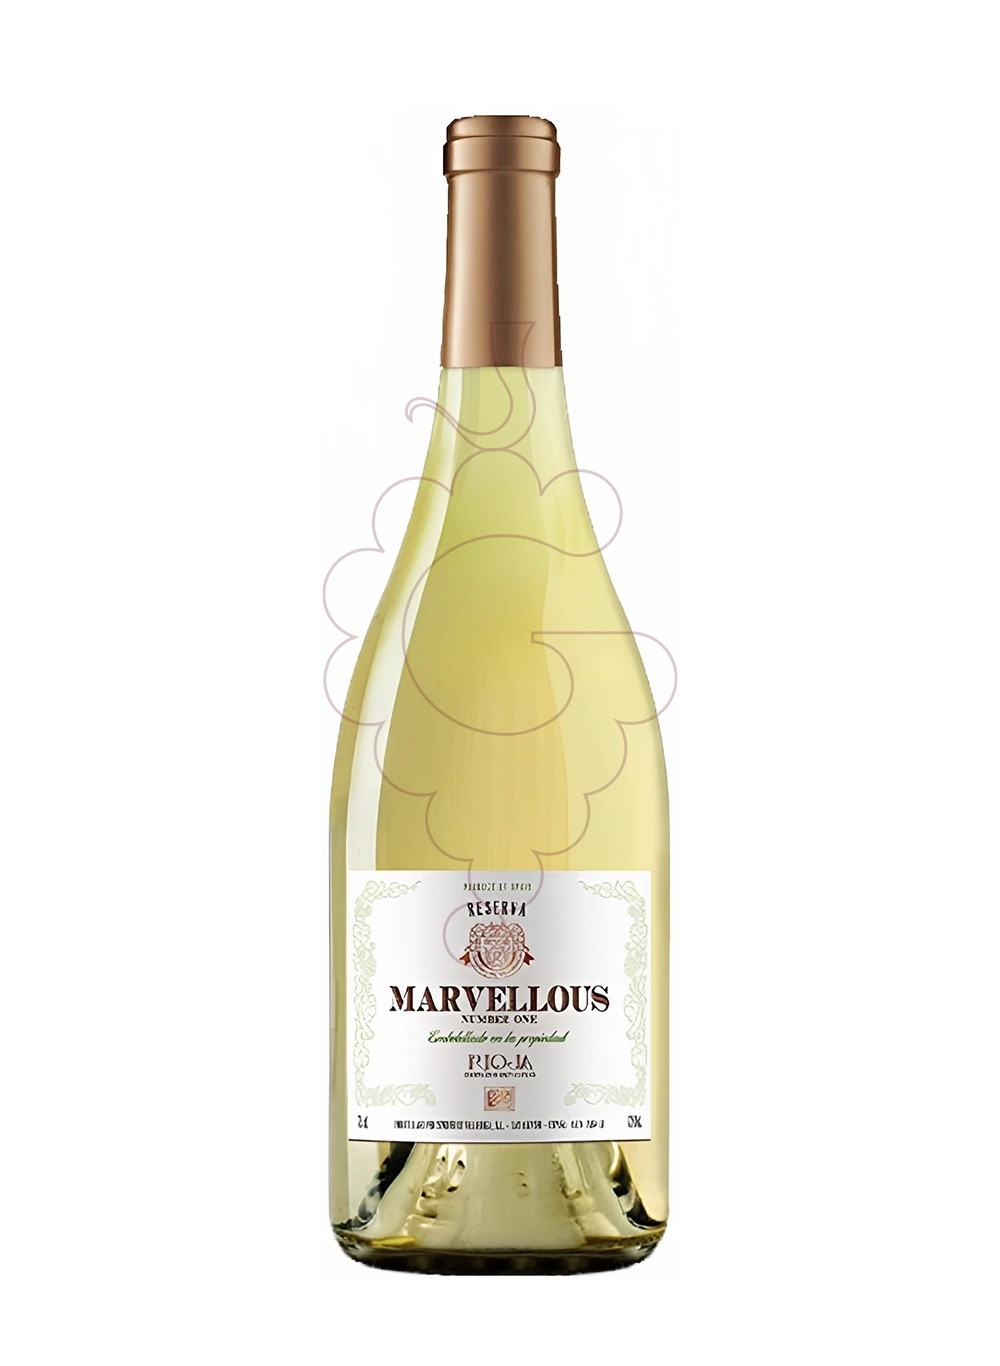 Photo Marvellous blanc g.r.2014 75cl white wine